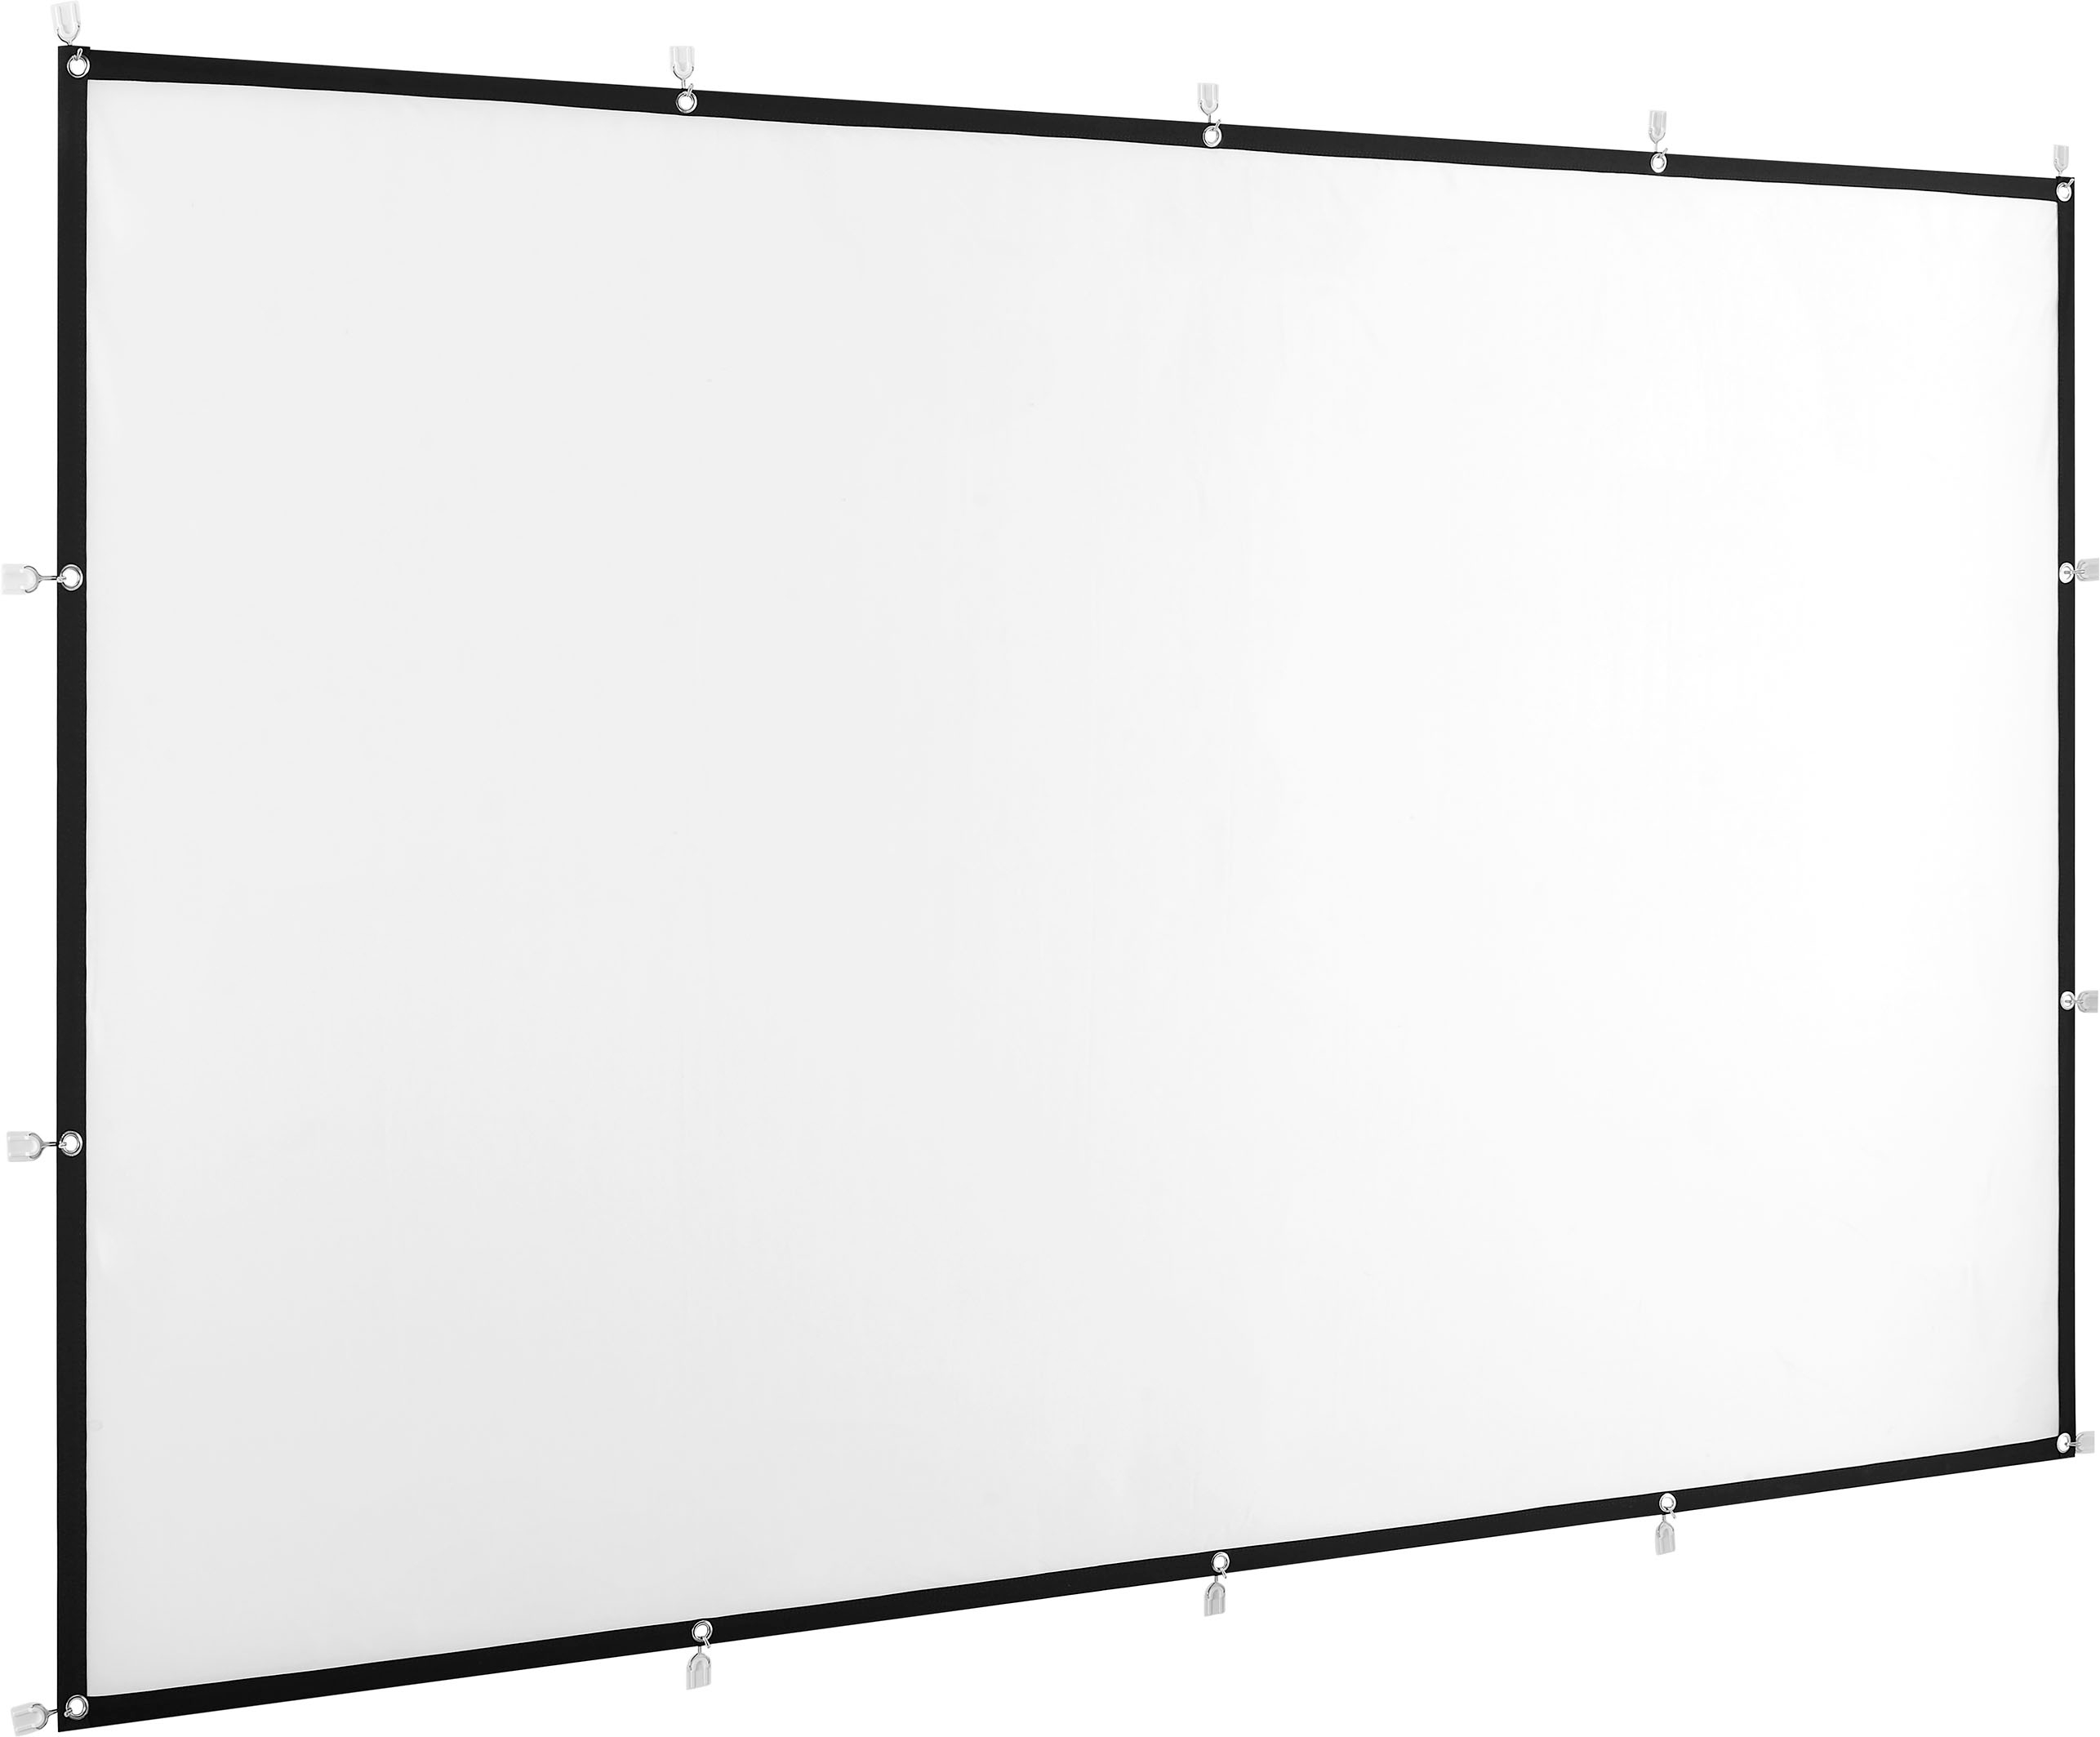 Angle View: Elite Screens - Aeon CineGrey 3D Series 100" Projector Screen - Black